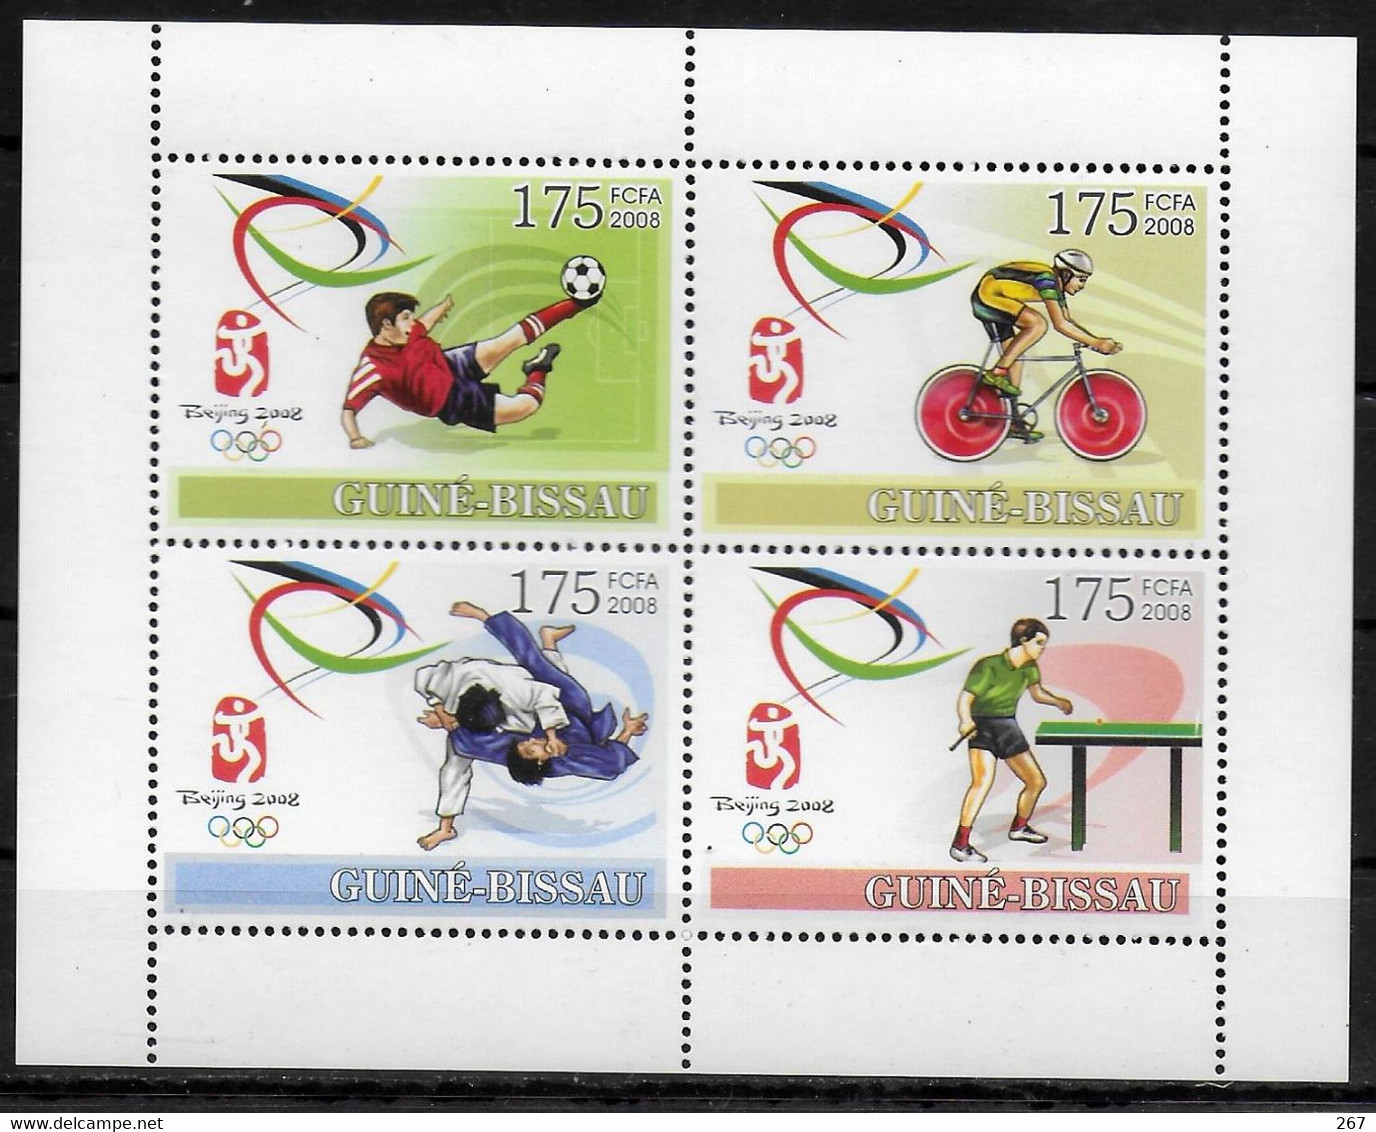 GUINEE  BISSAU Feuillet  N°  2460/63 * *  Jo 2008   Football Soccer Fussball Cyclisme Judo Tennis De Table - Unused Stamps